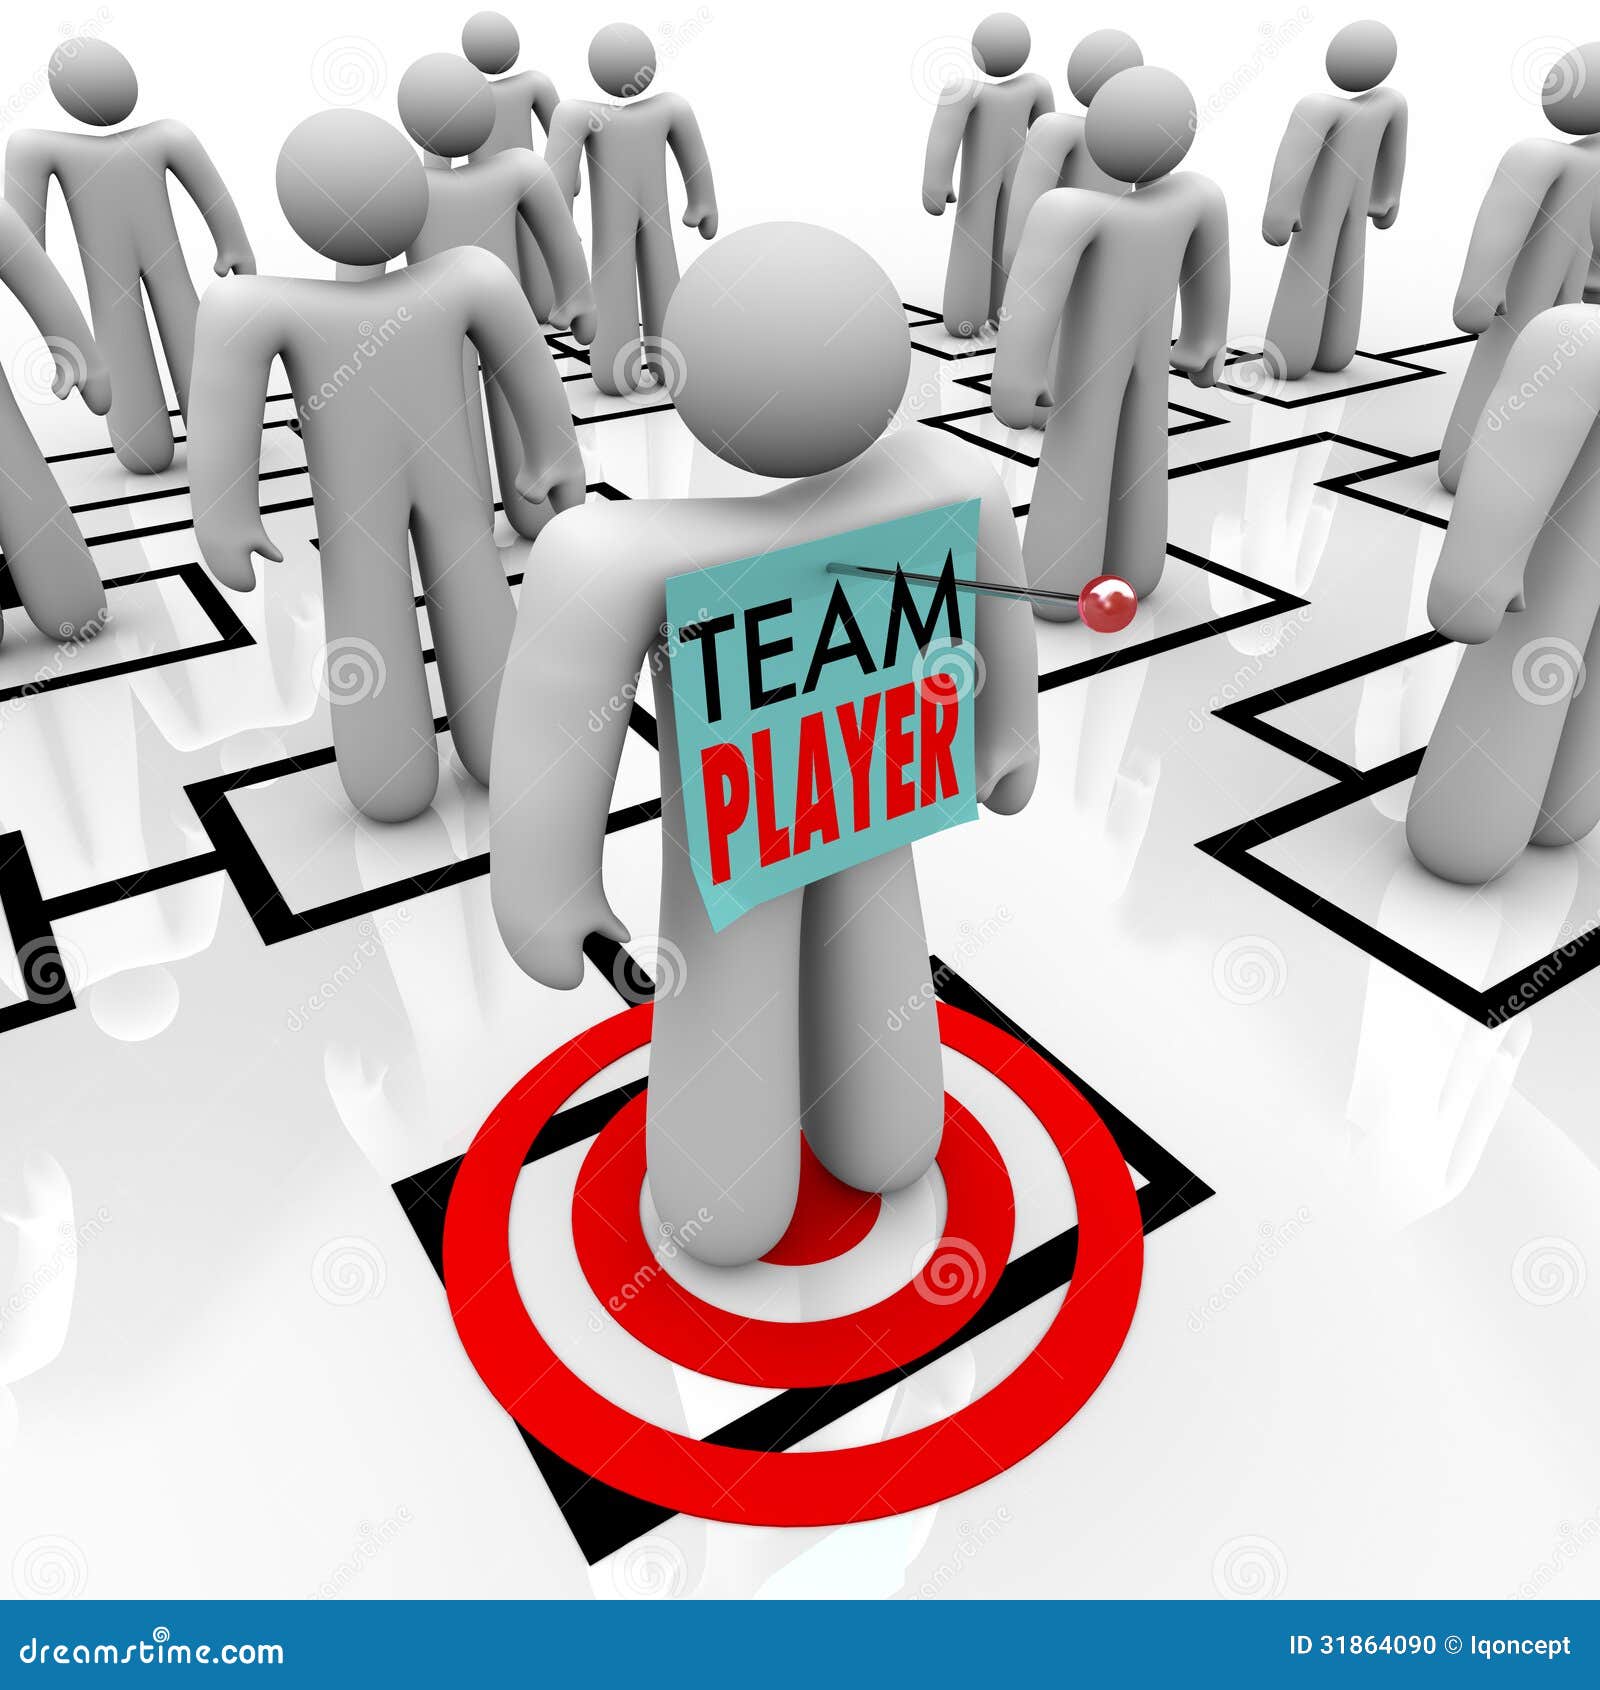 team player targeted in organizational org chart teamwork